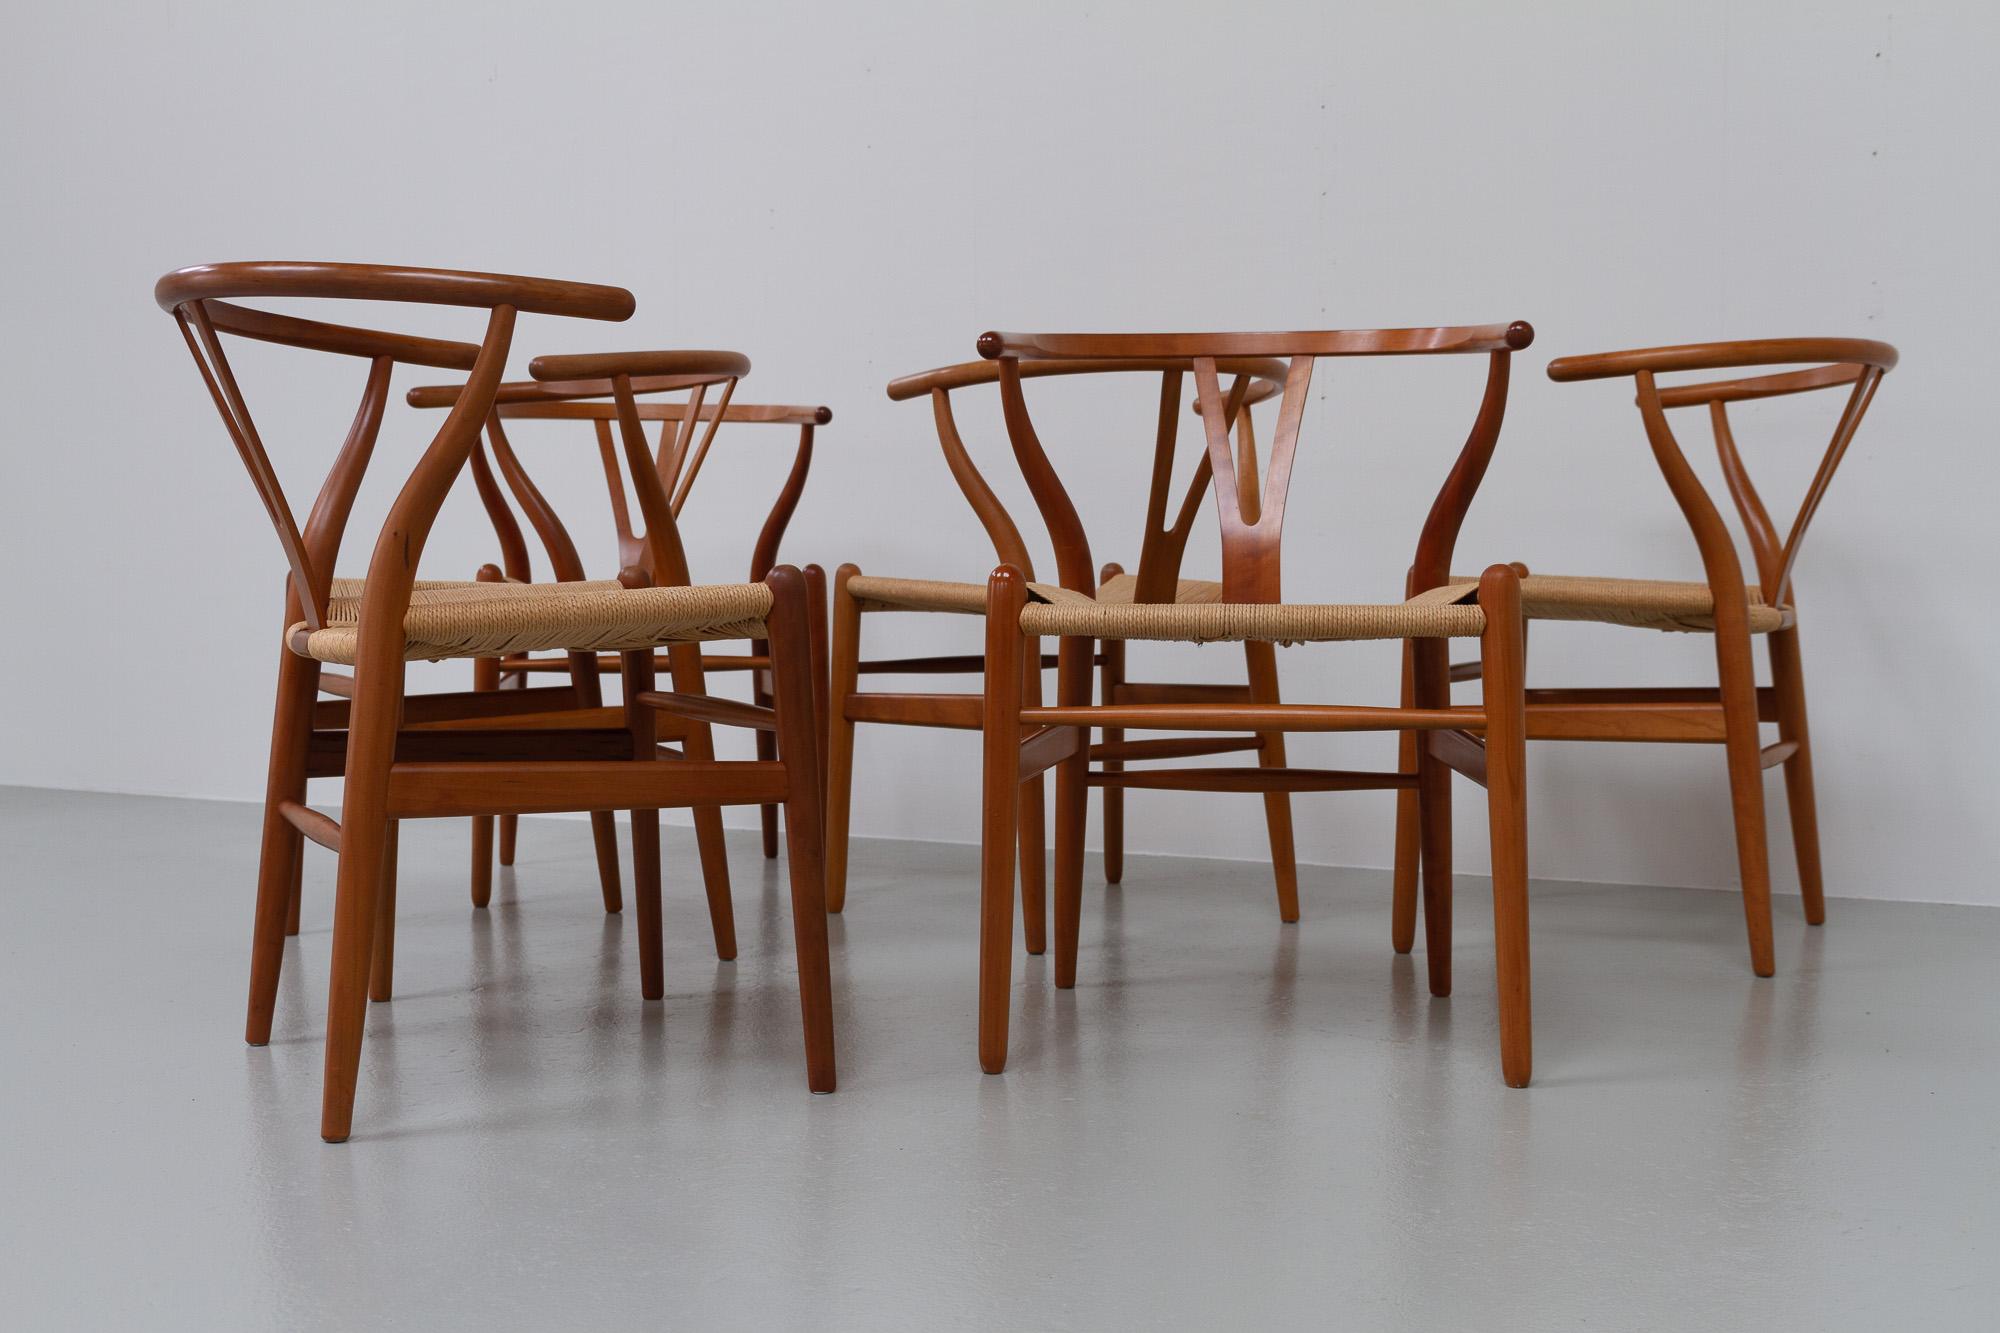 Late 20th Century Danish Modern Cherry CH24 Wishbone Chairs by Hans J. Wegner, 1990s For Sale